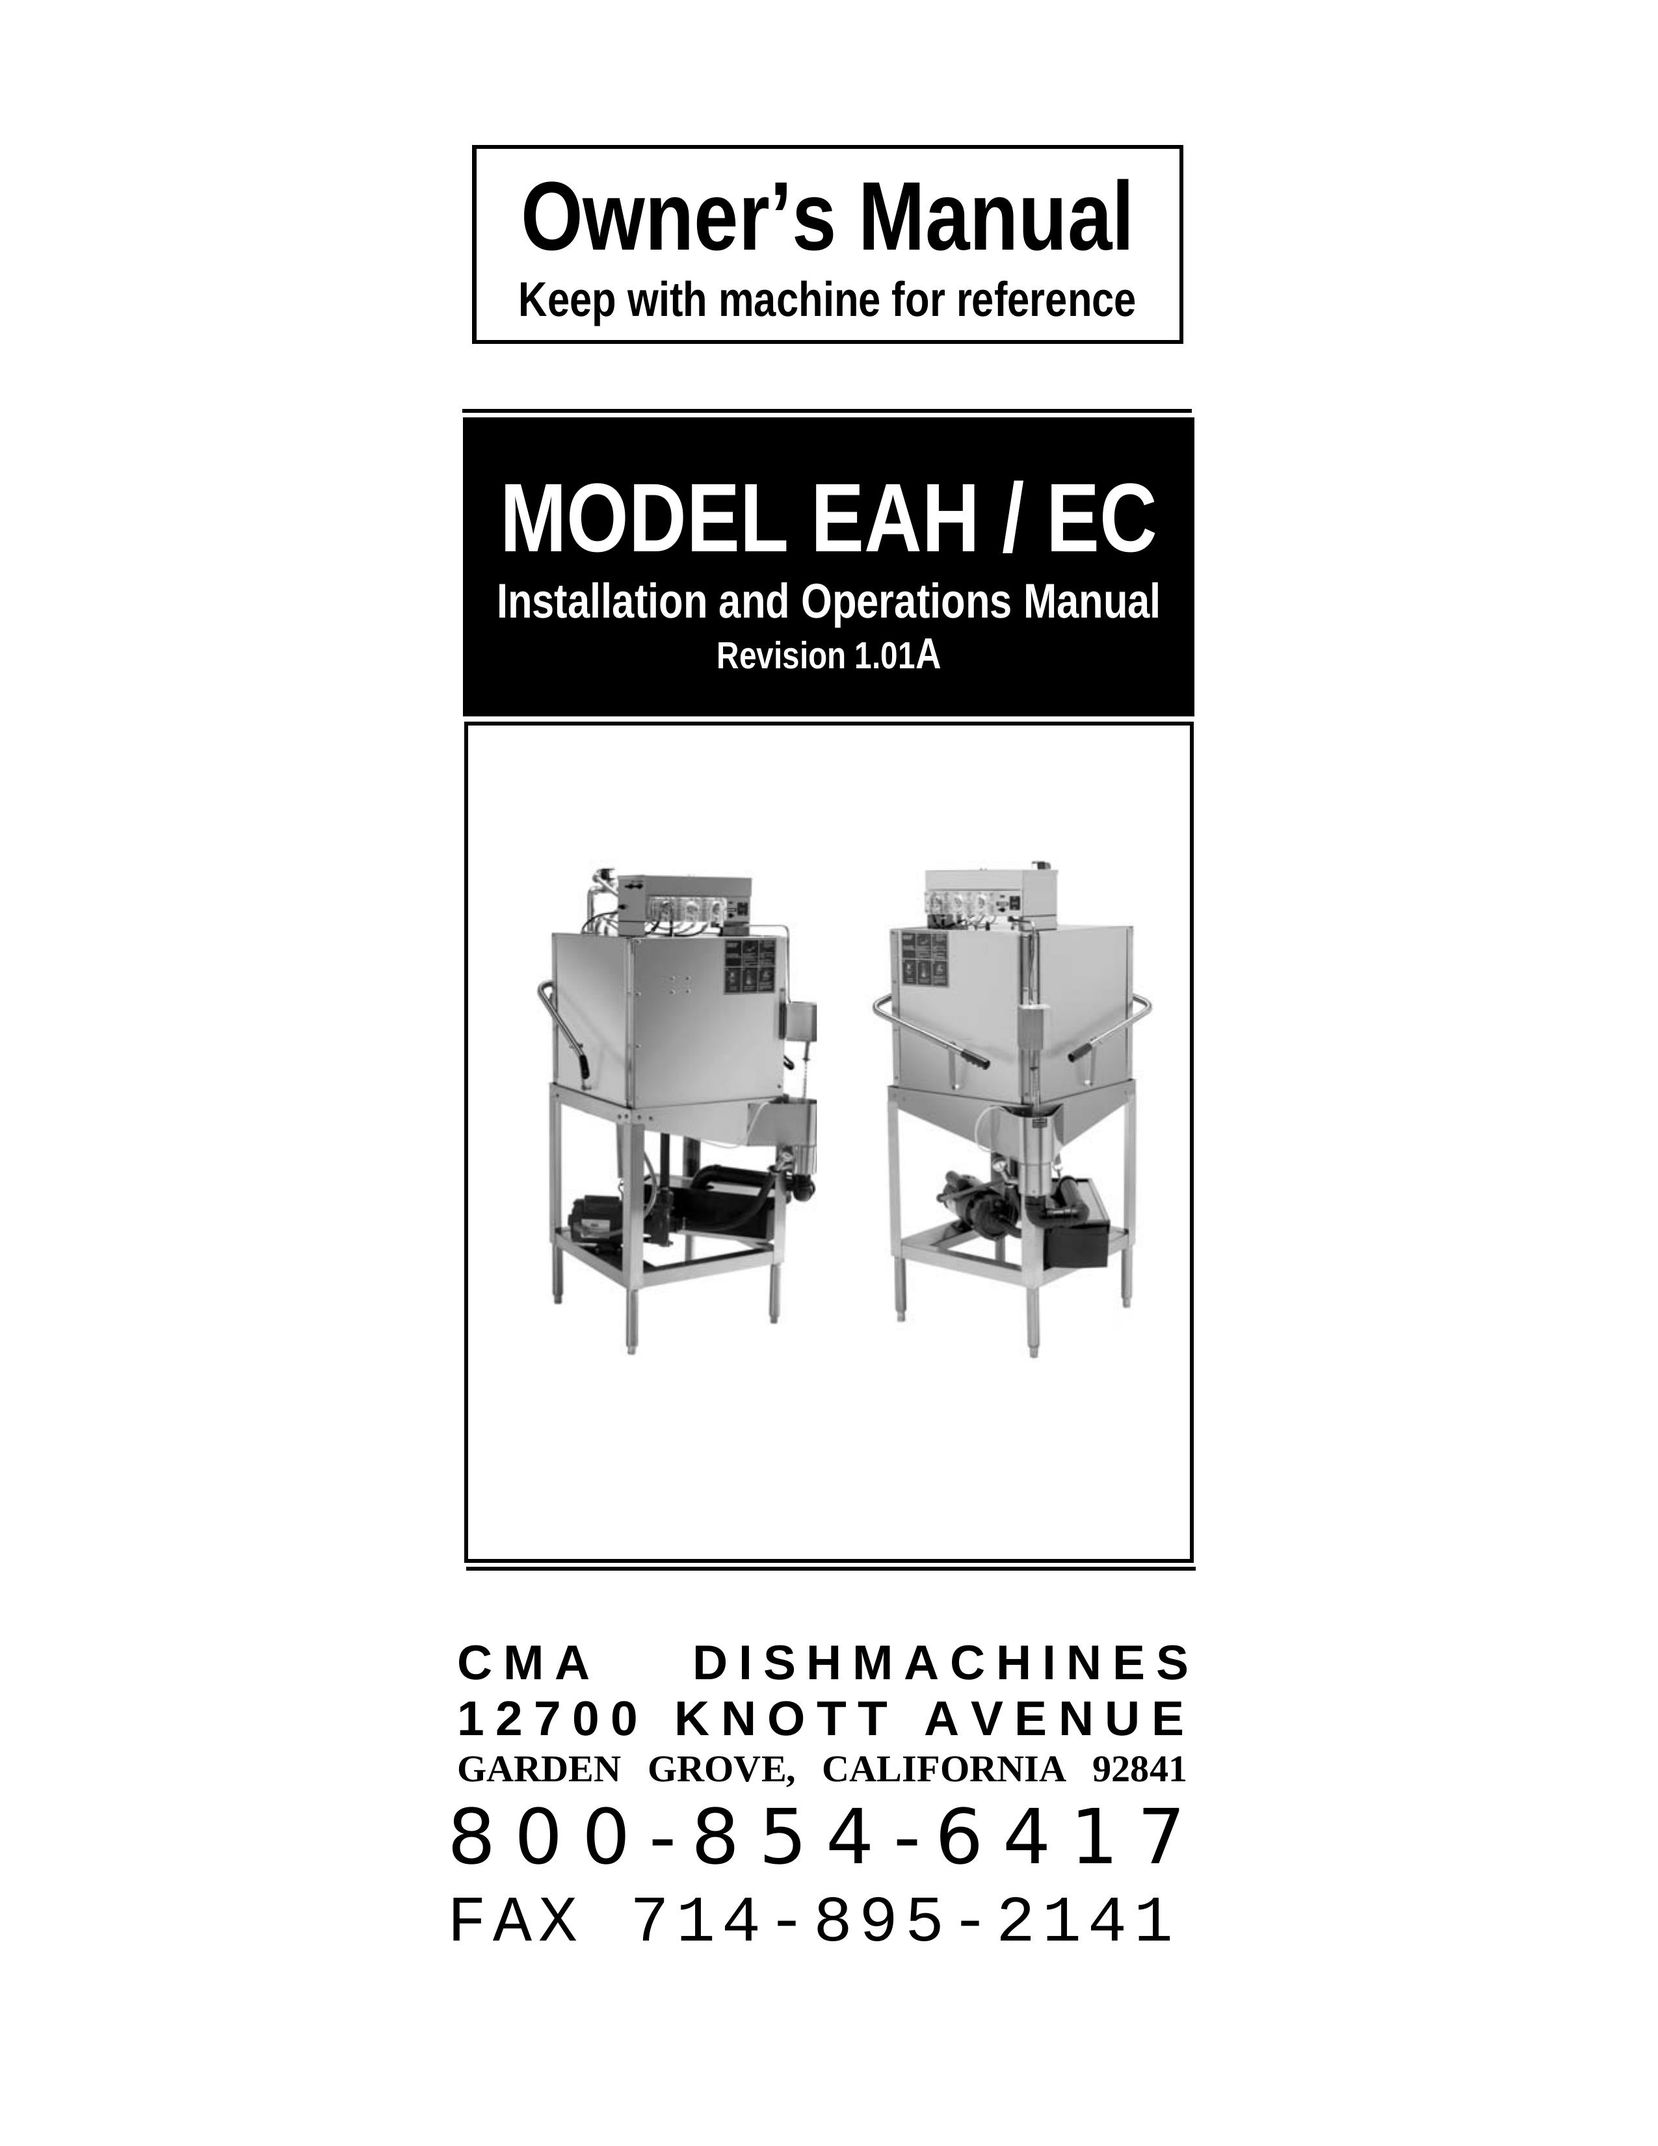 CMA Dishmachines EAH/EC Dishwasher User Manual